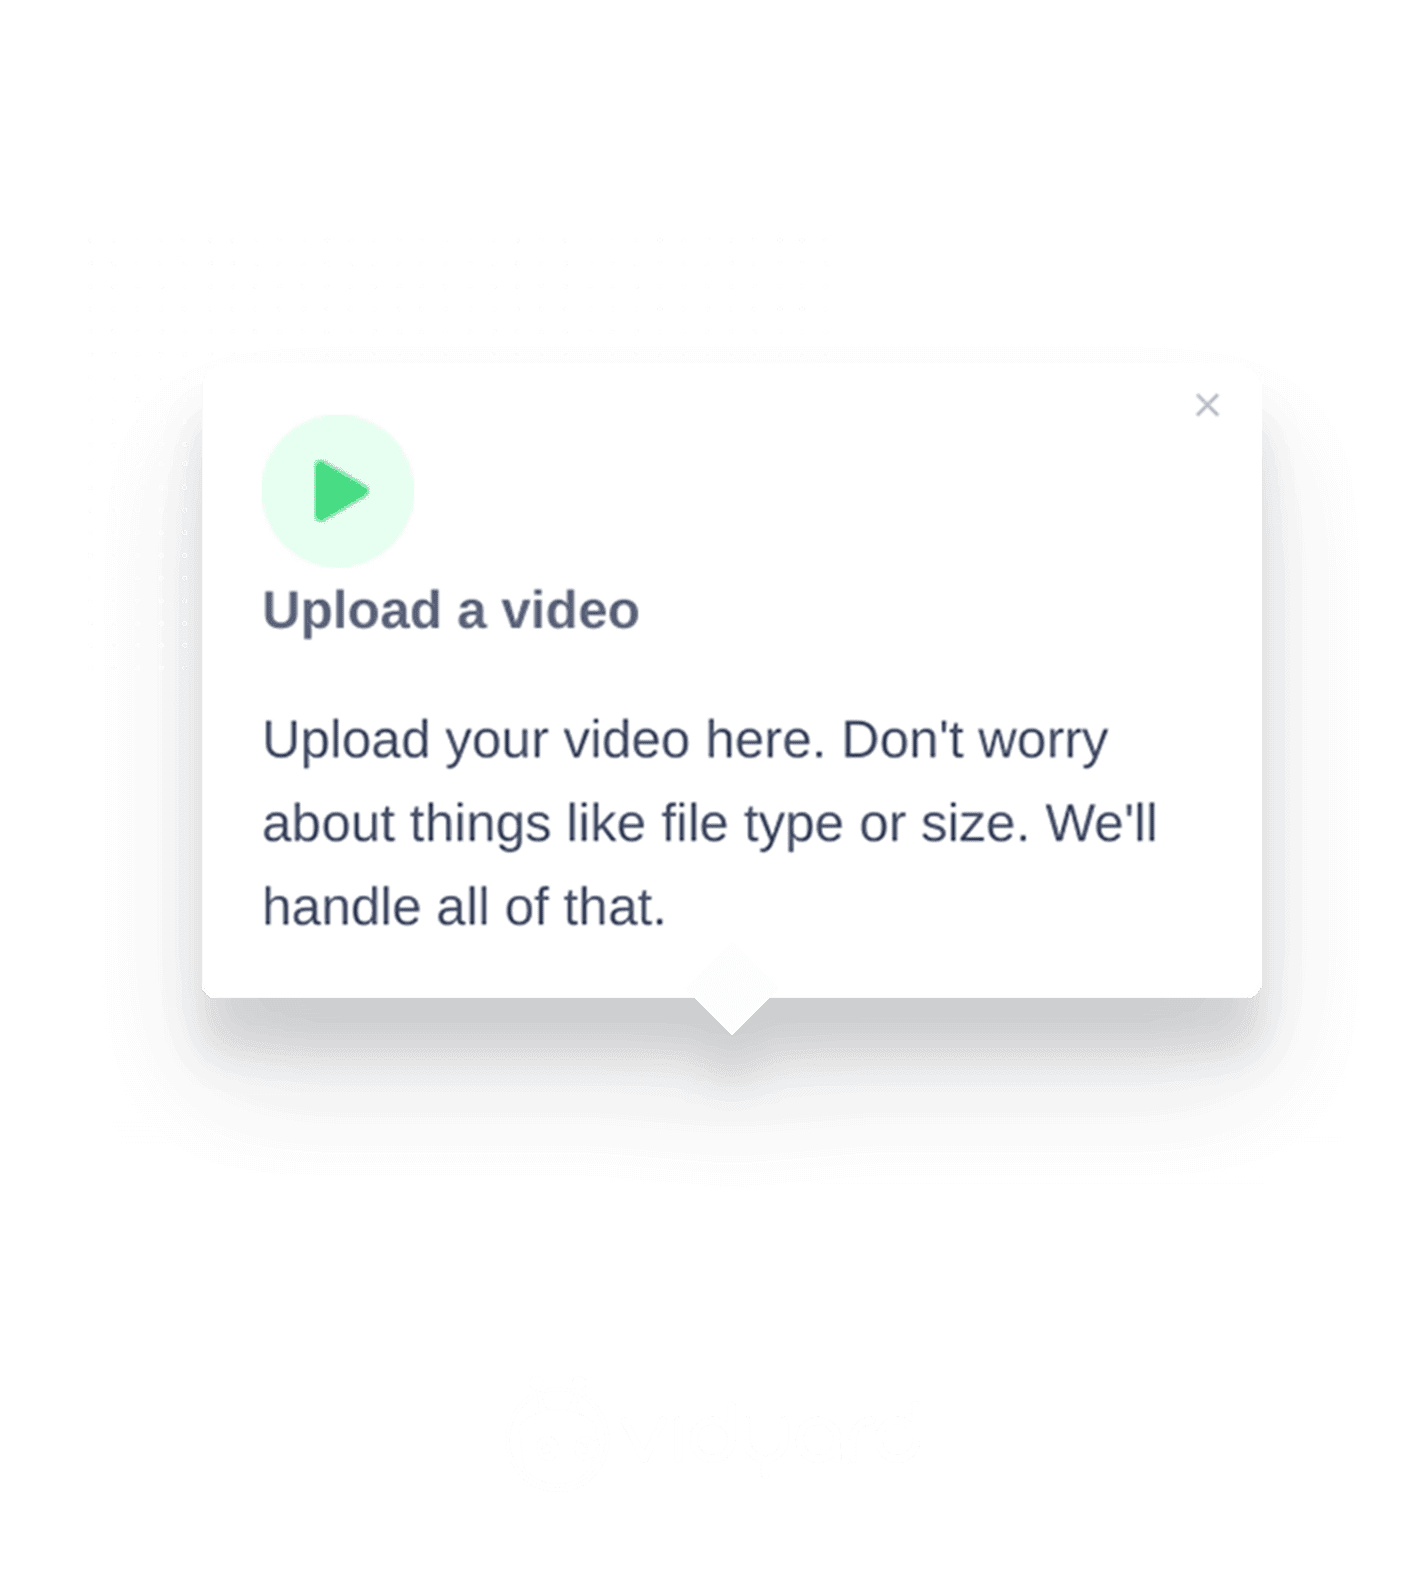 Vidyard tooltip created using Appcues